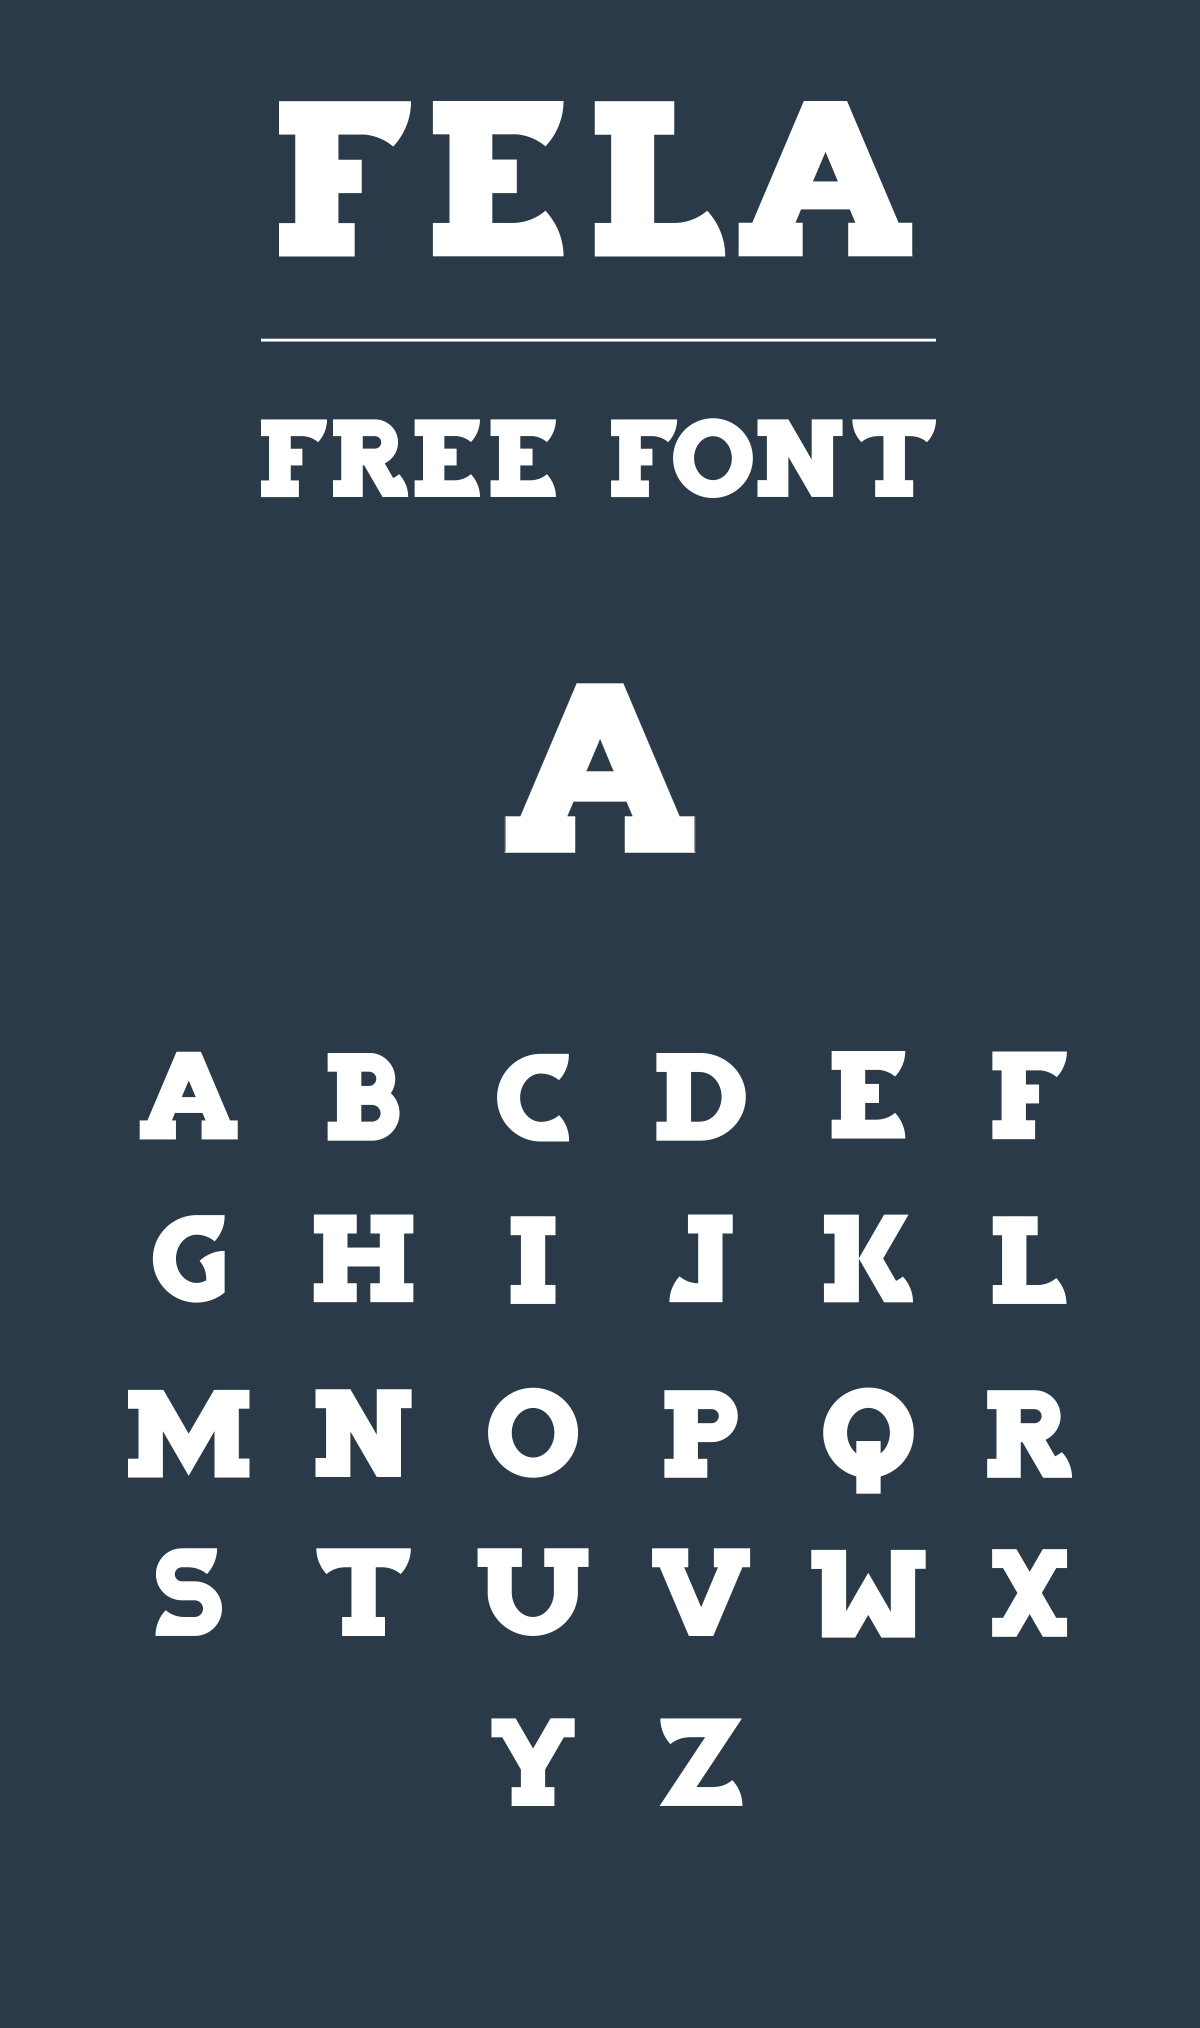 freefont font Typeface new fela download slabserif egyptienne free type